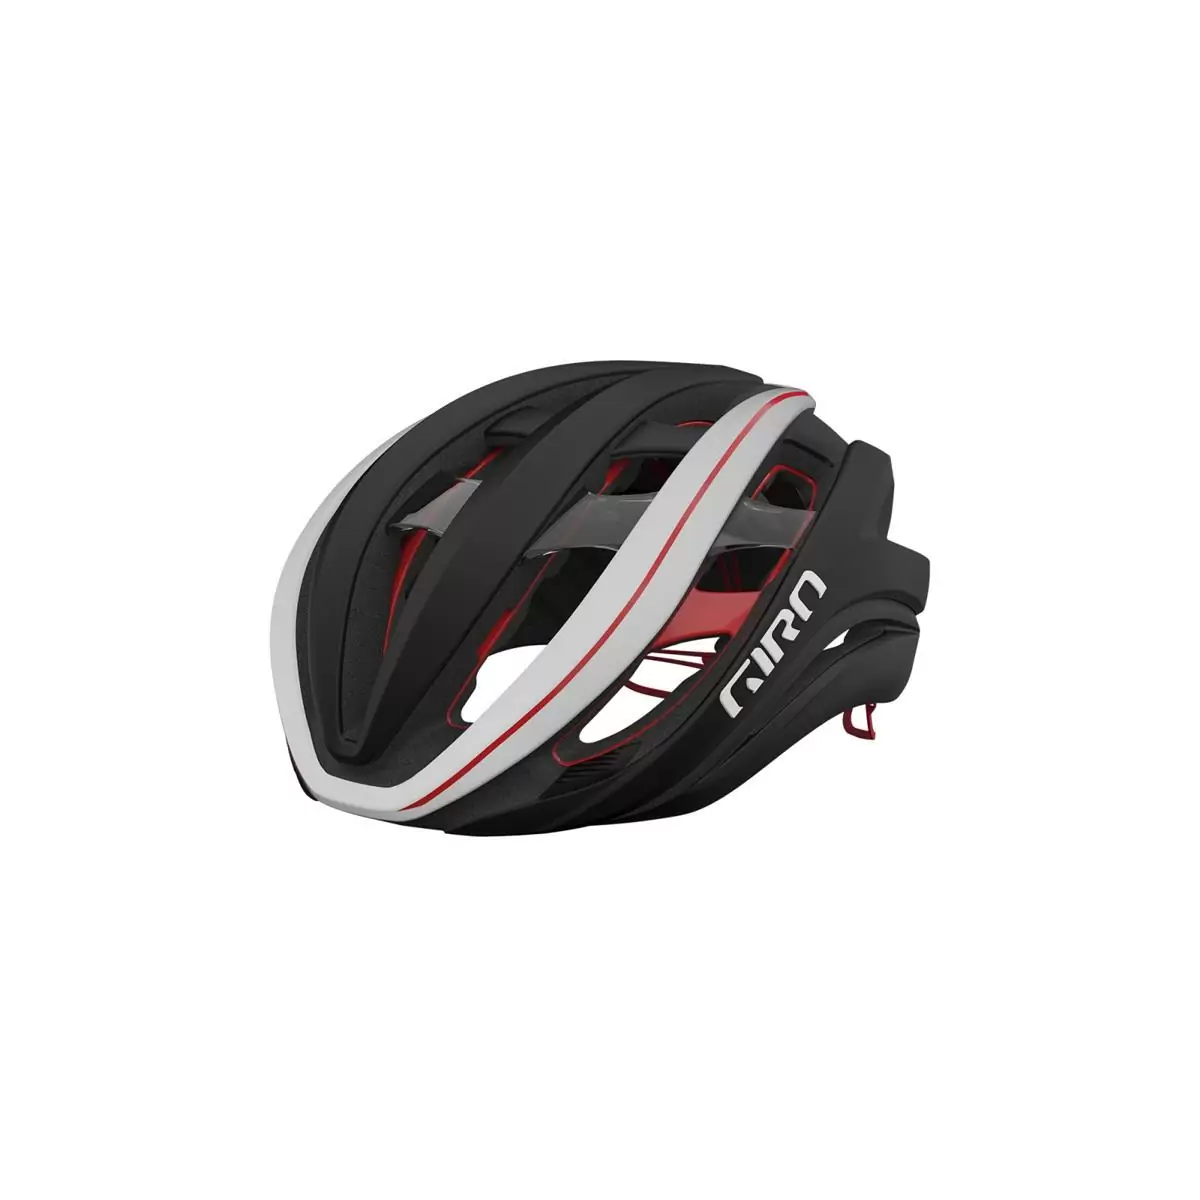 Helmet Aether Spherical MIPS Black/Red Size L (59-63cm) - image